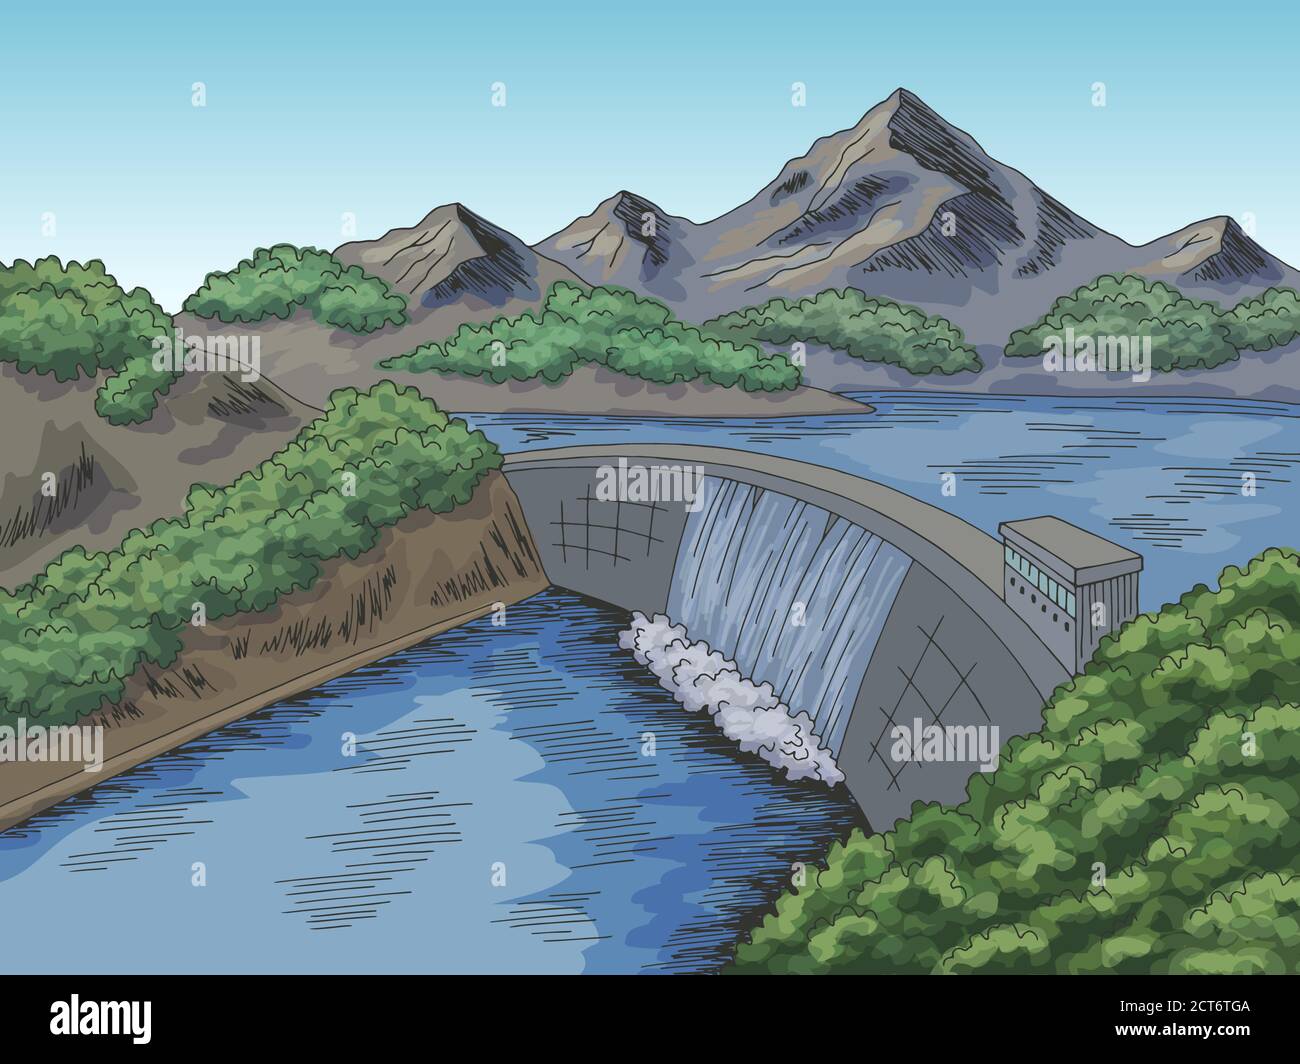 Dam Hydropower River Graphic Black White Landscape Sketch Illustration  Vector Stock Illustration  Download Image Now  iStock